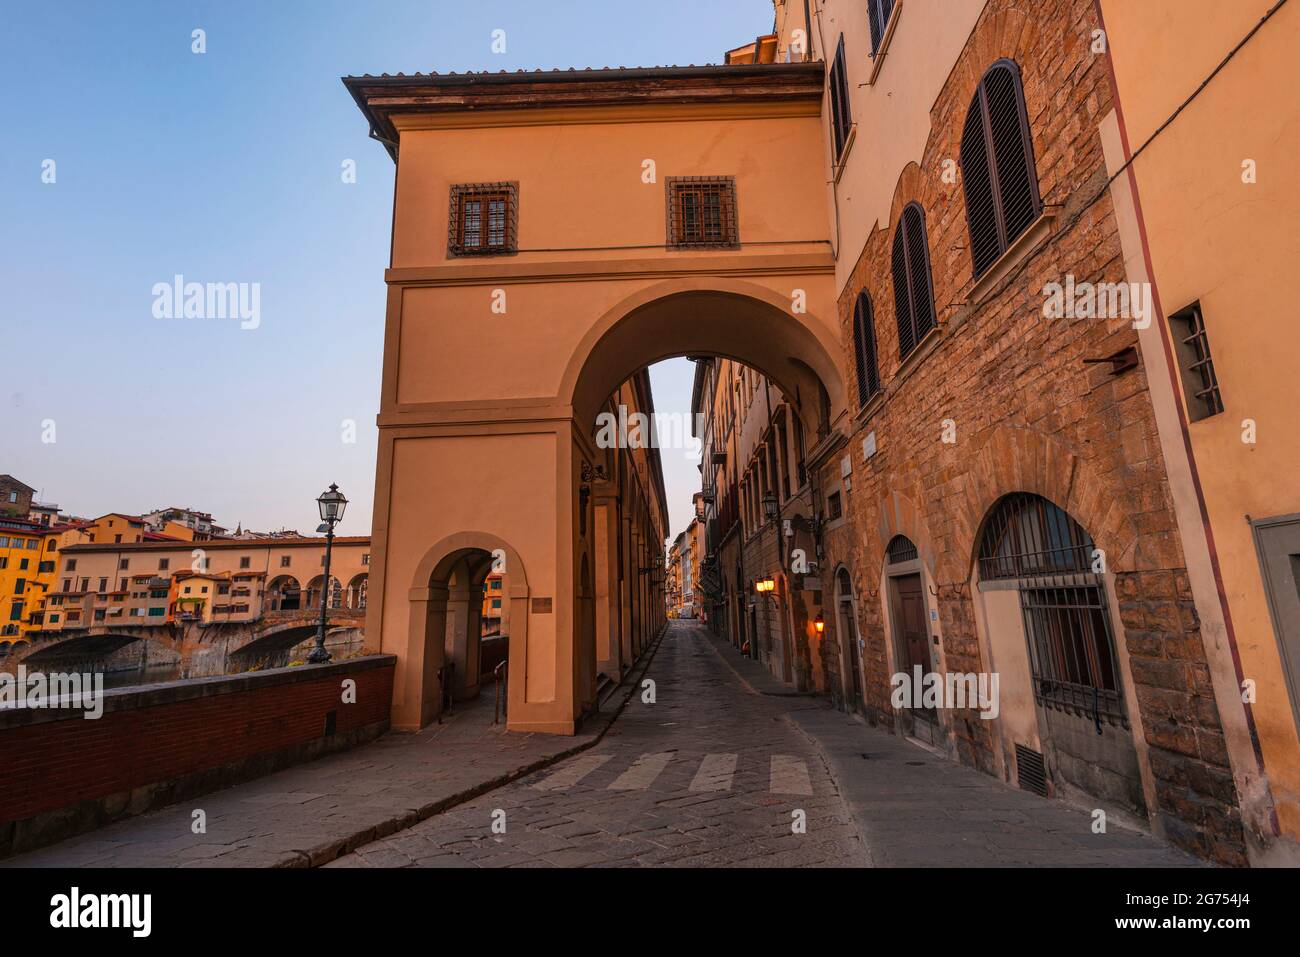 Corridoio Vasariano Passage, Florence, Italy. Beautiful symmetrical, warm yellow architecture. Vasari Corridor. Ponte Vecchio in the background Stock Photo